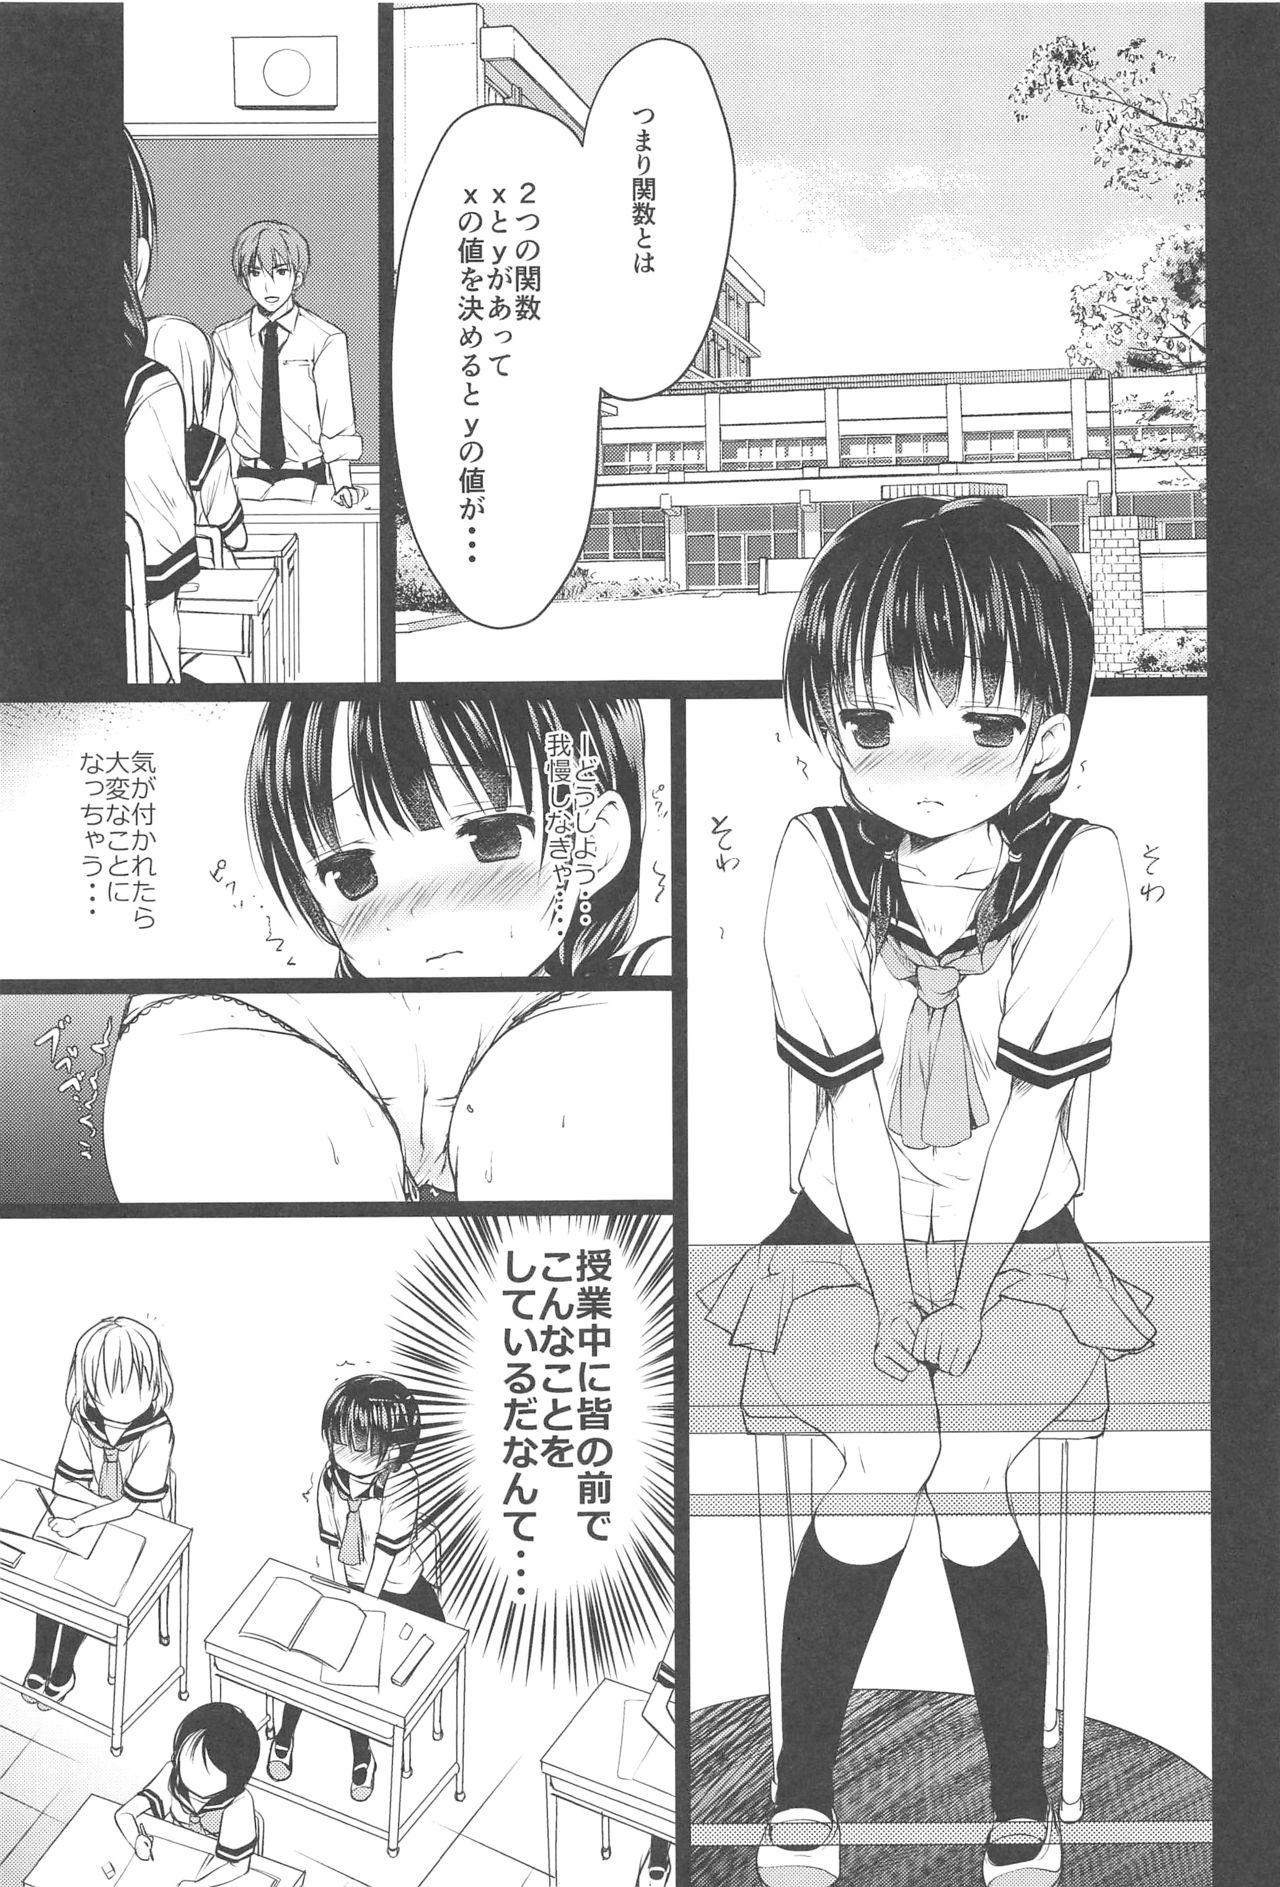 Spooning Shoujo Kuukan - JC to Sensei - Original Village - Page 2